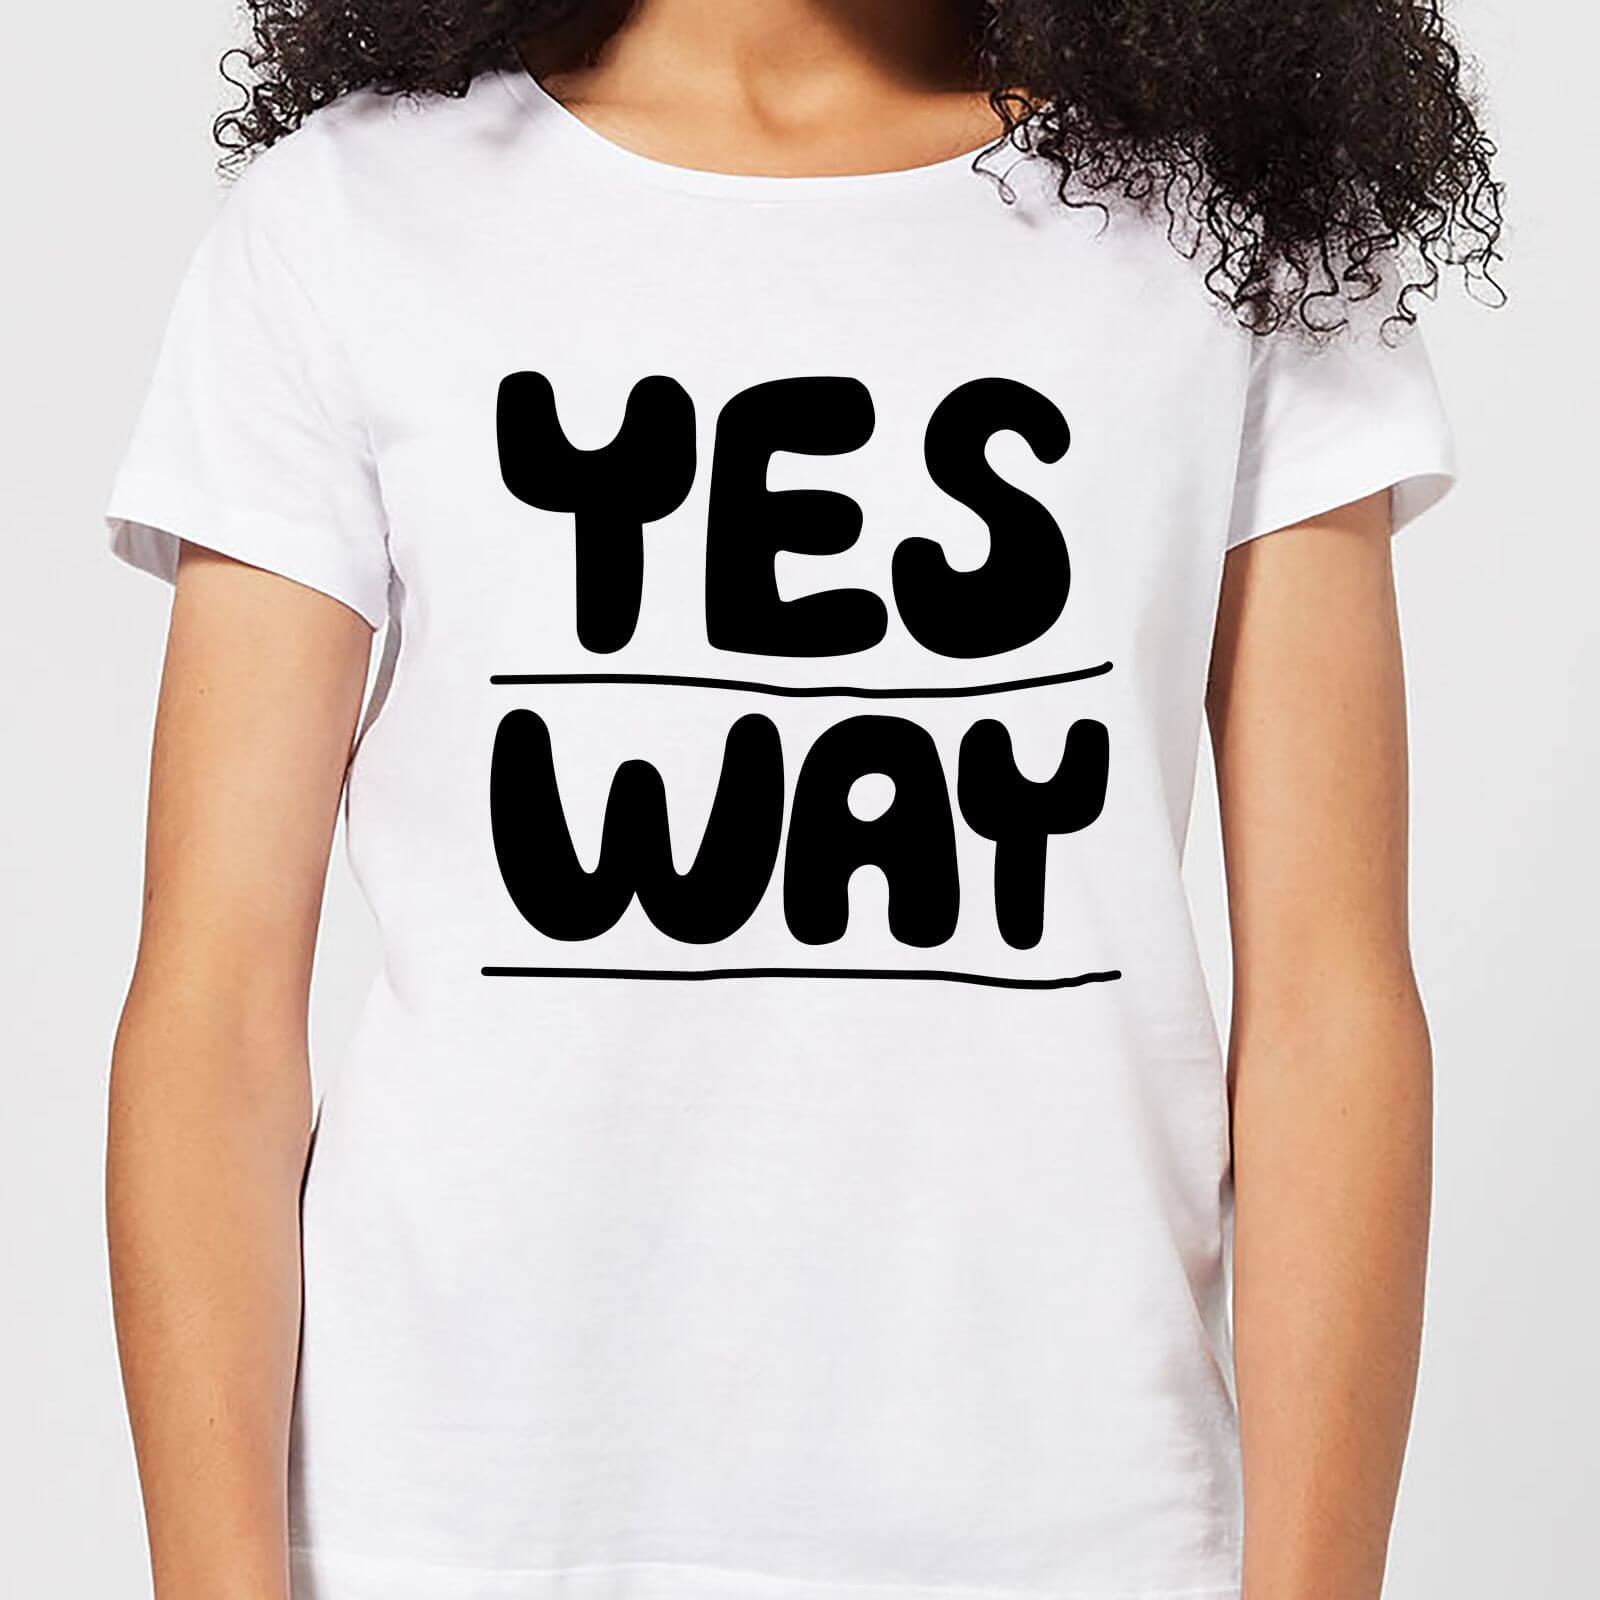 The Motivated Type Yes Way Women's T-Shirt - White - S - White